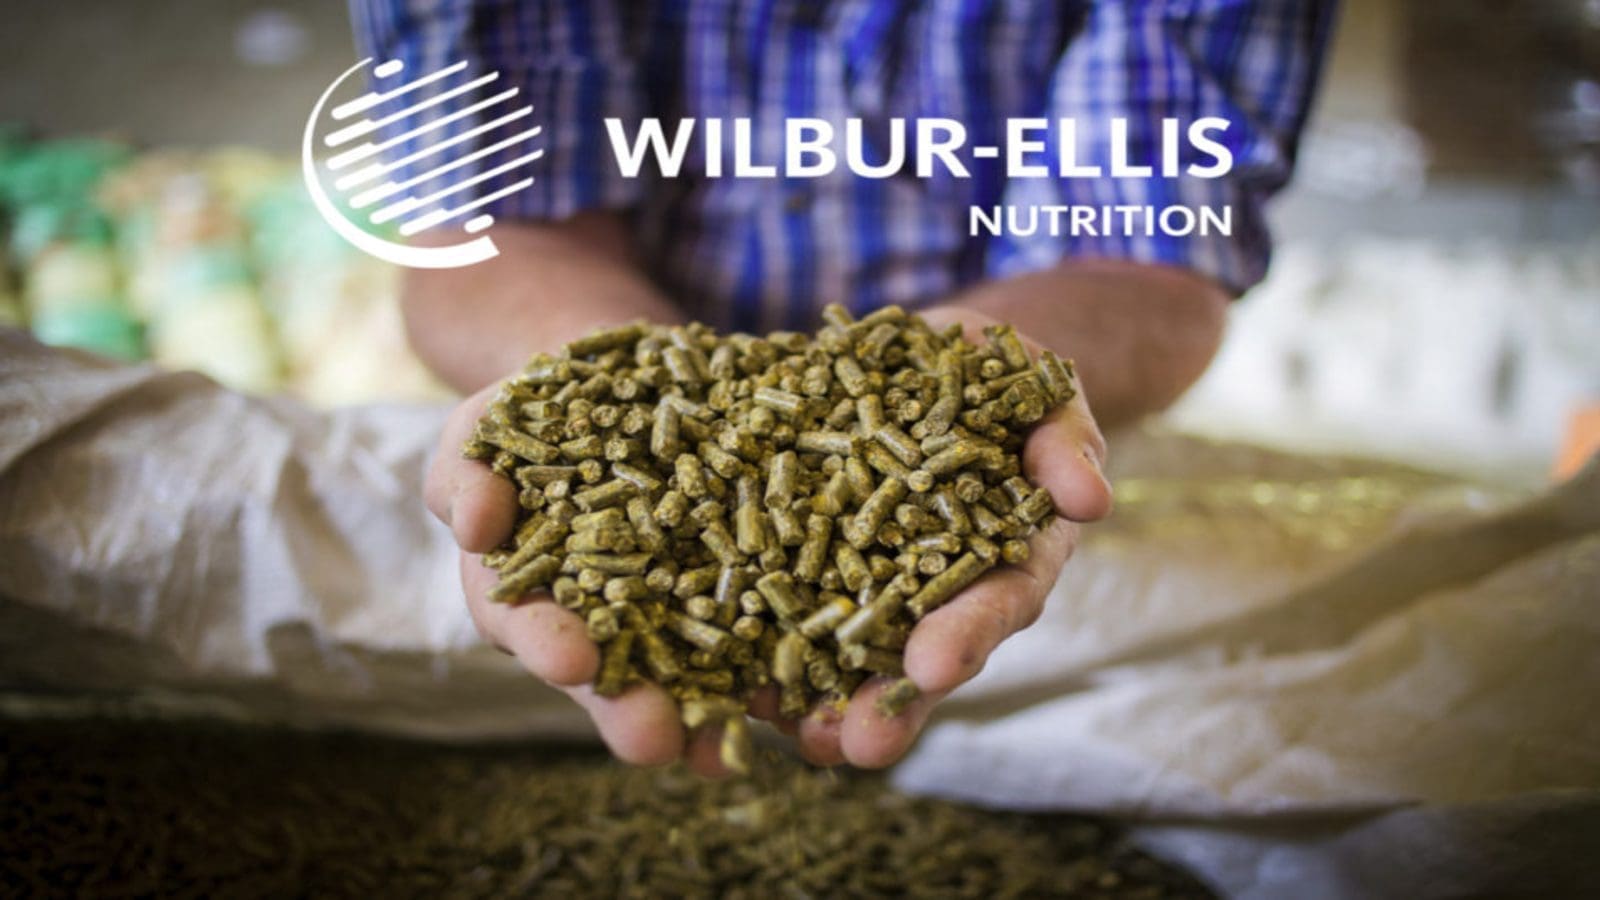 Wilbur-Ellis Nutrition to acquire F.L. Emmert, strengthening pet food presence